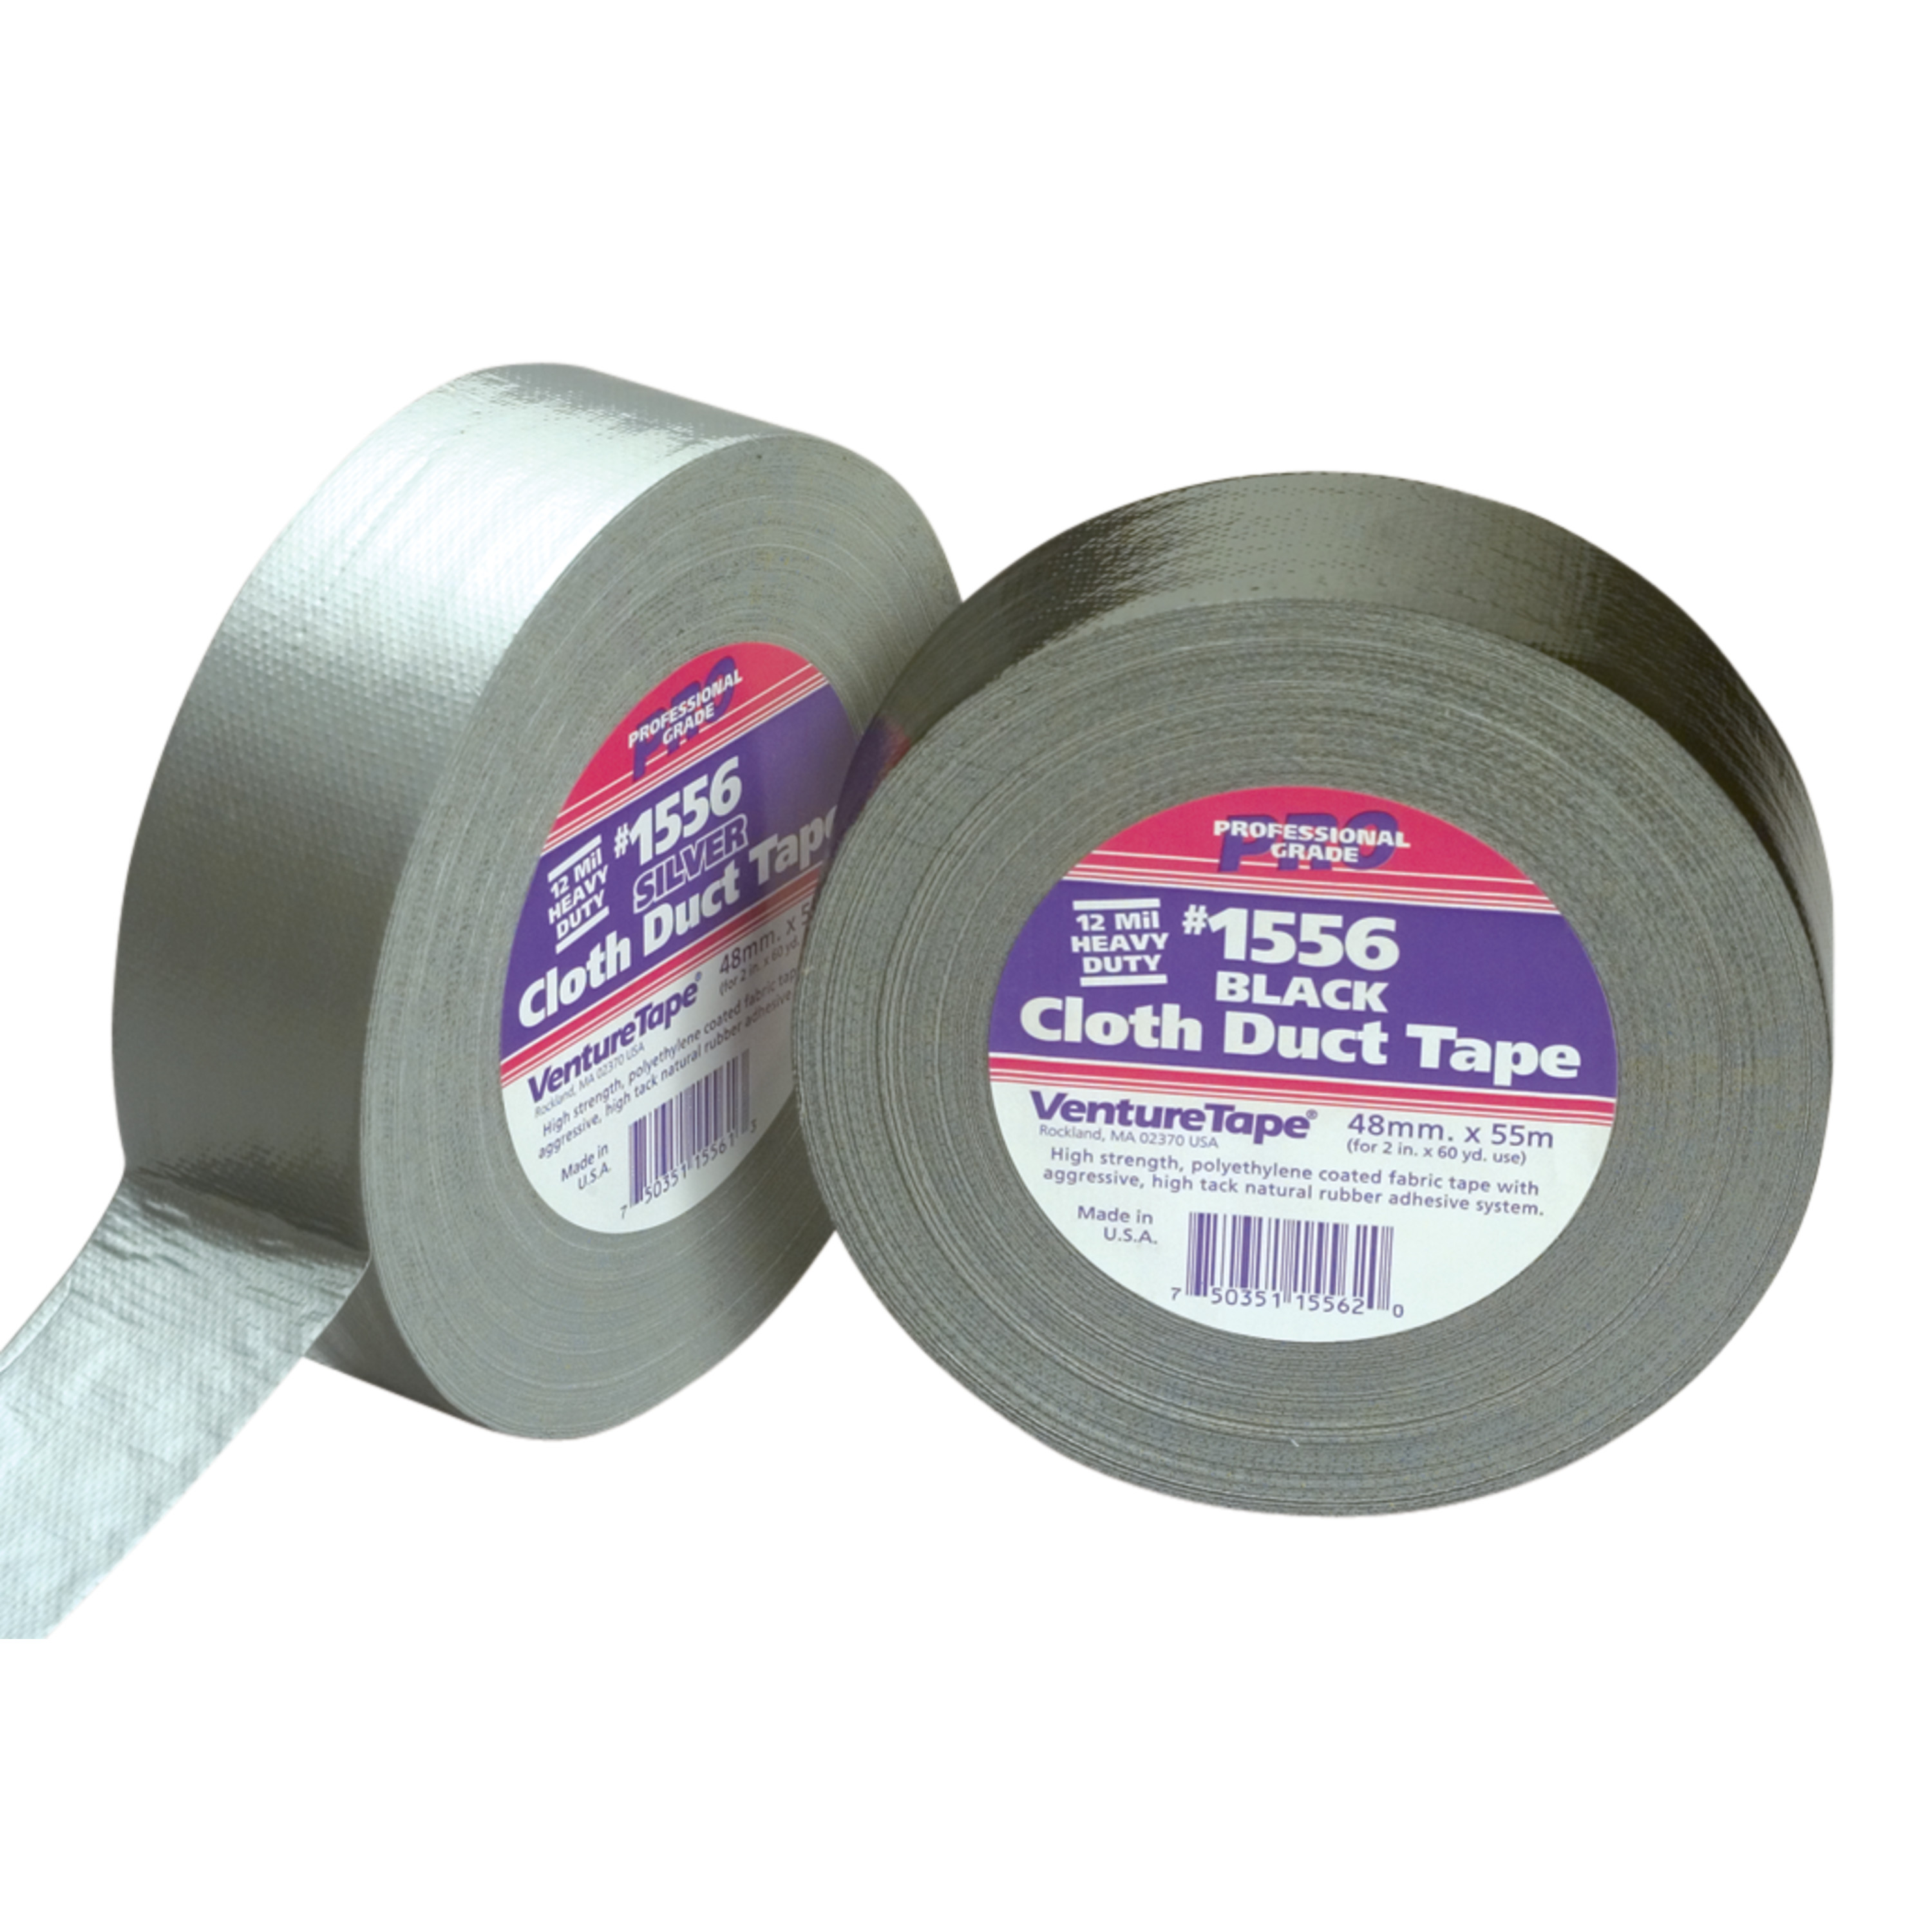 3M™ Venture Tape™ High Performance Cloth Duct Tape 1556, Black, 48 mm x
55 m (1.88 in x 60.1 yd), 24 per case